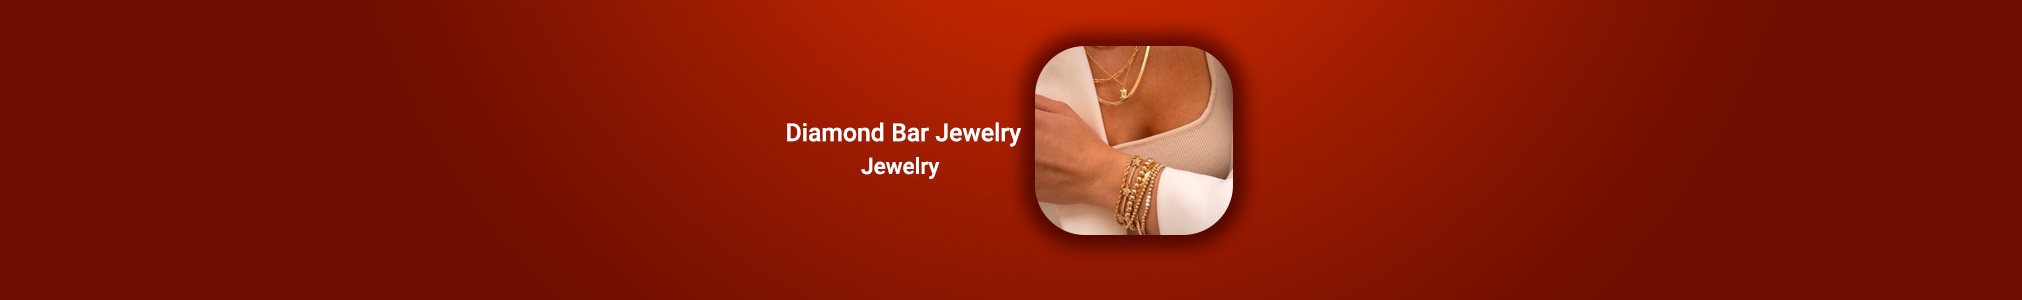 Diamond Bar Jewelry